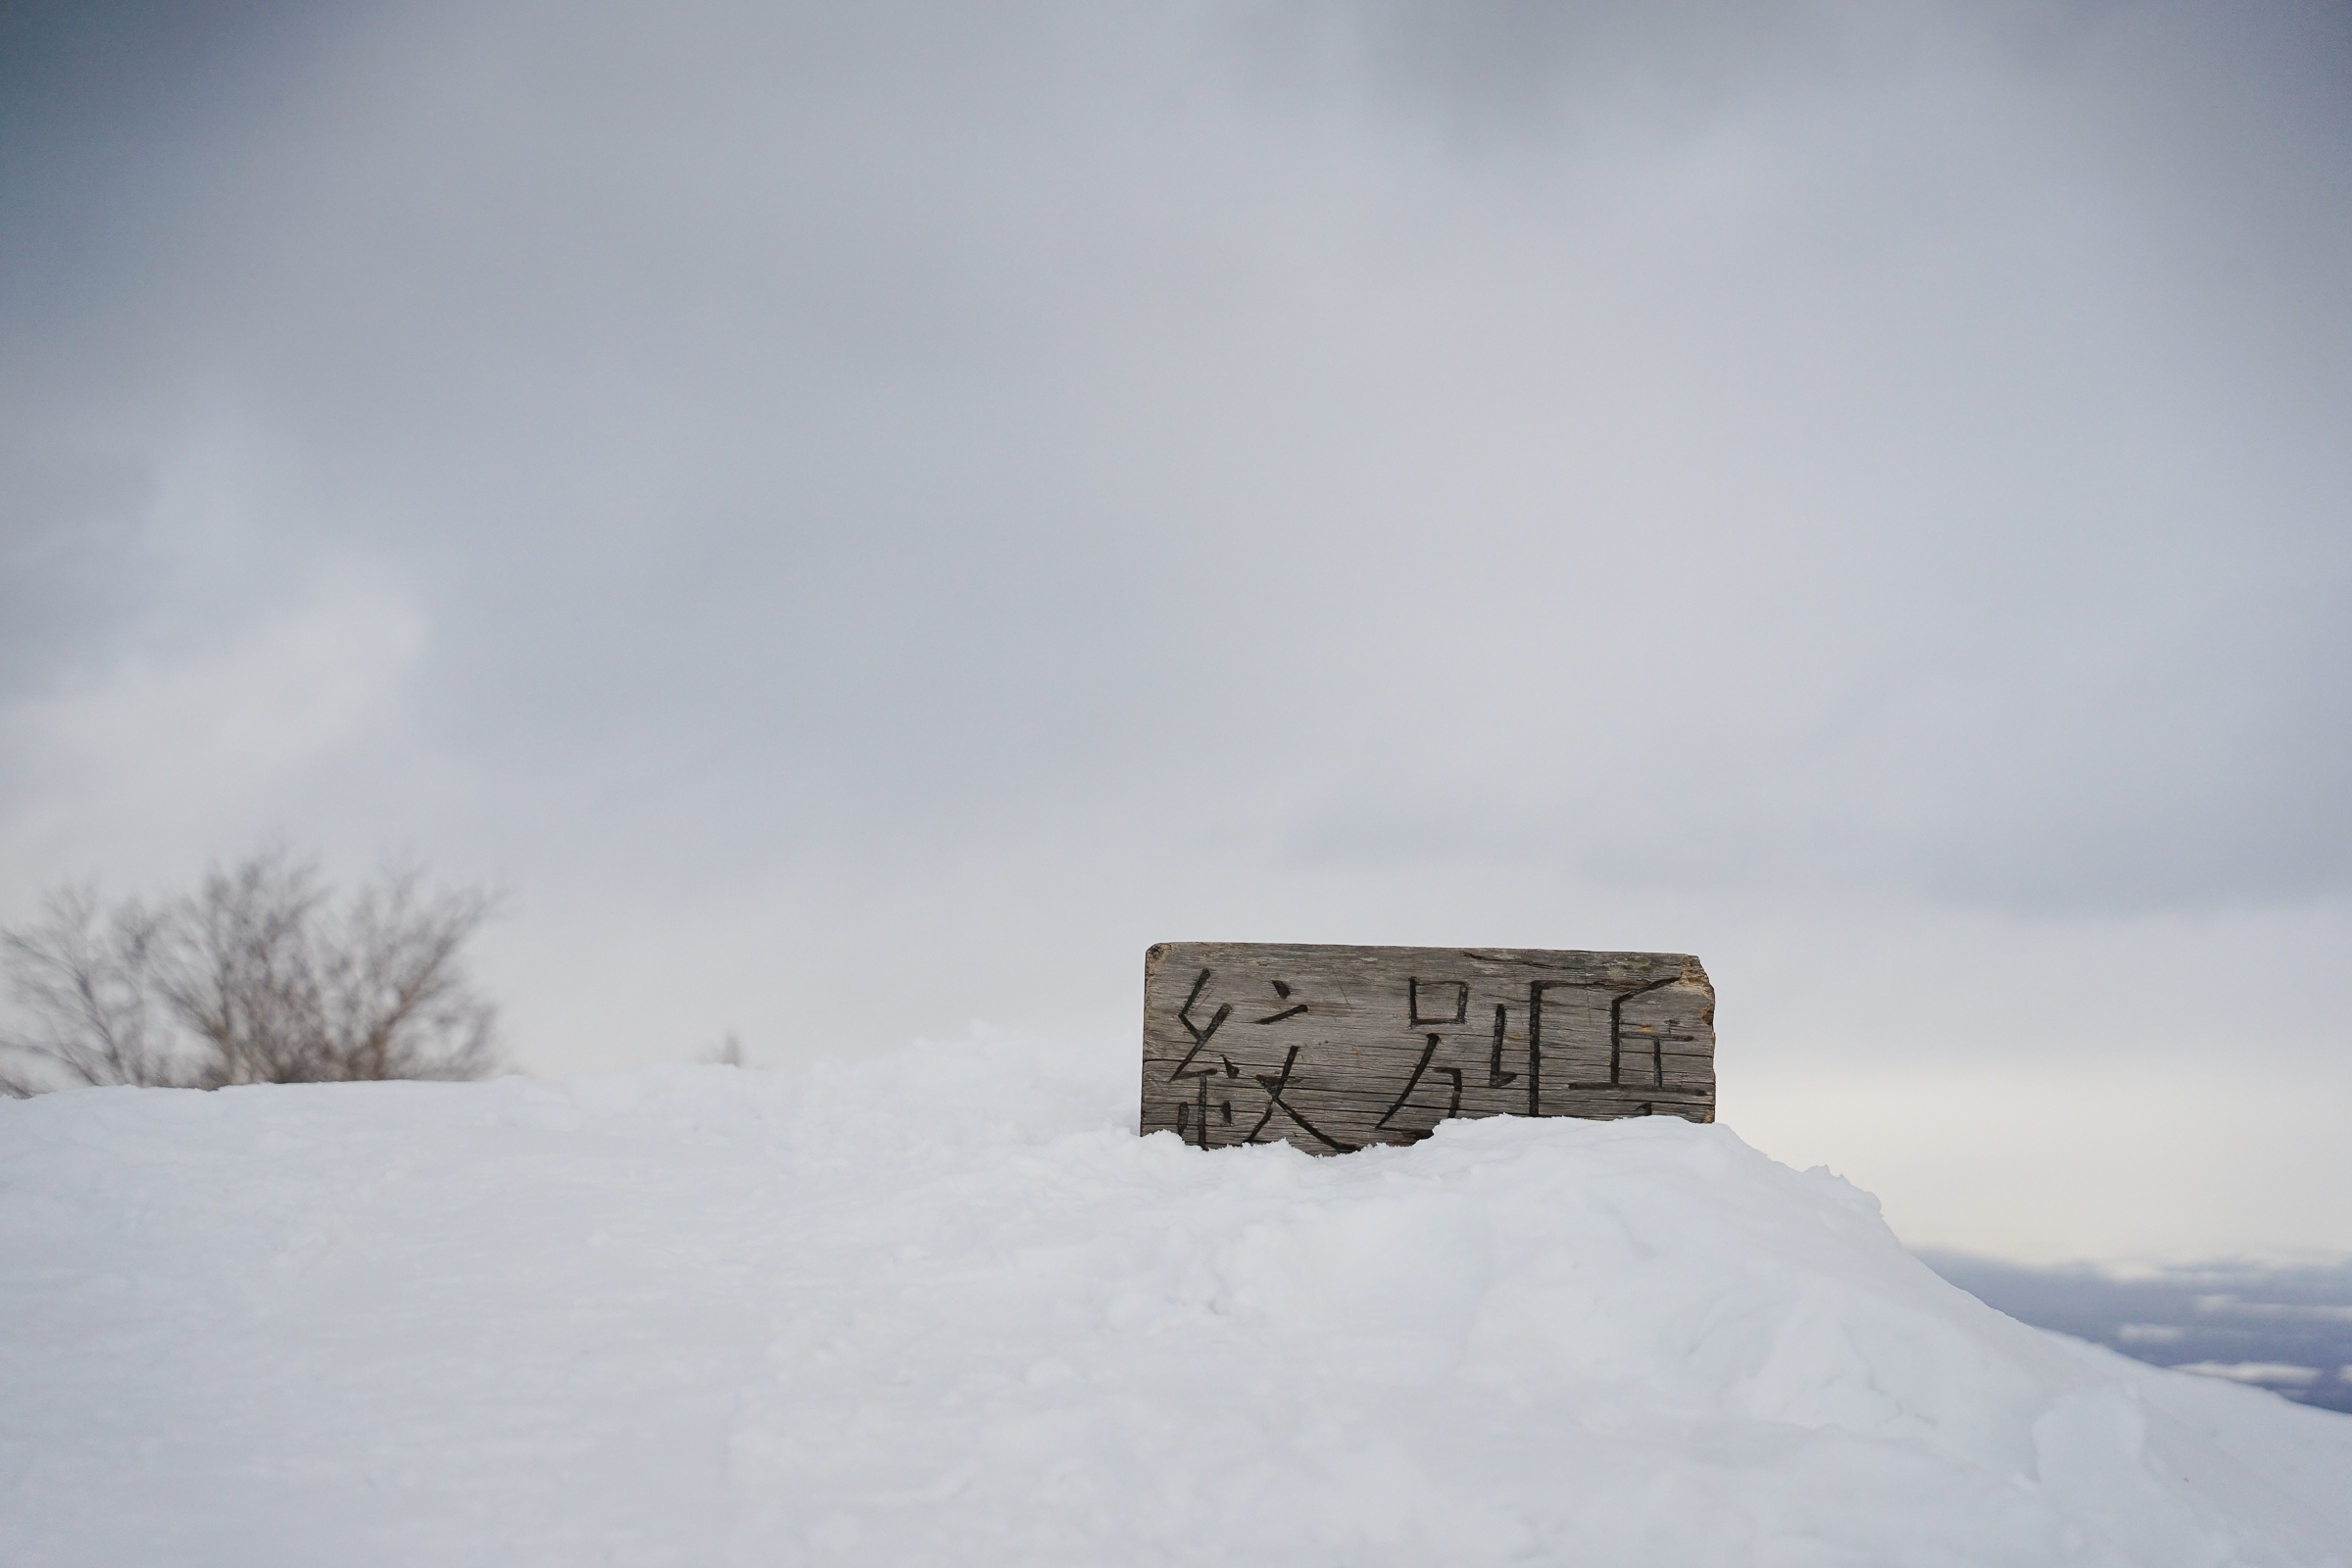 The summit signpost of Mt. Monbetsu half-buried in snow.